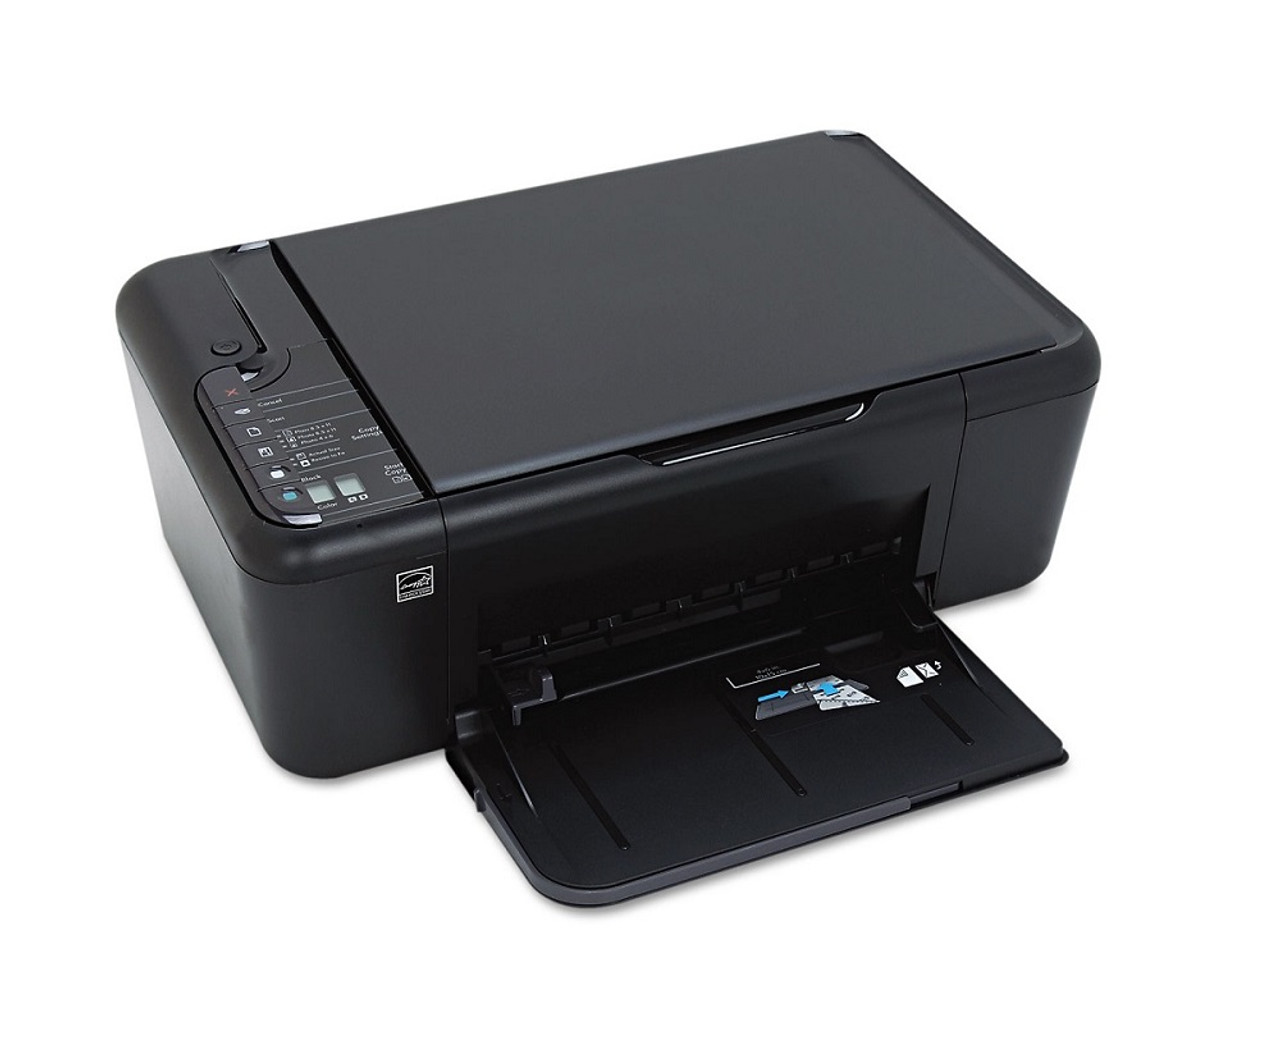 B9S56A - HP Envy 5640 e-All-in-One Printer